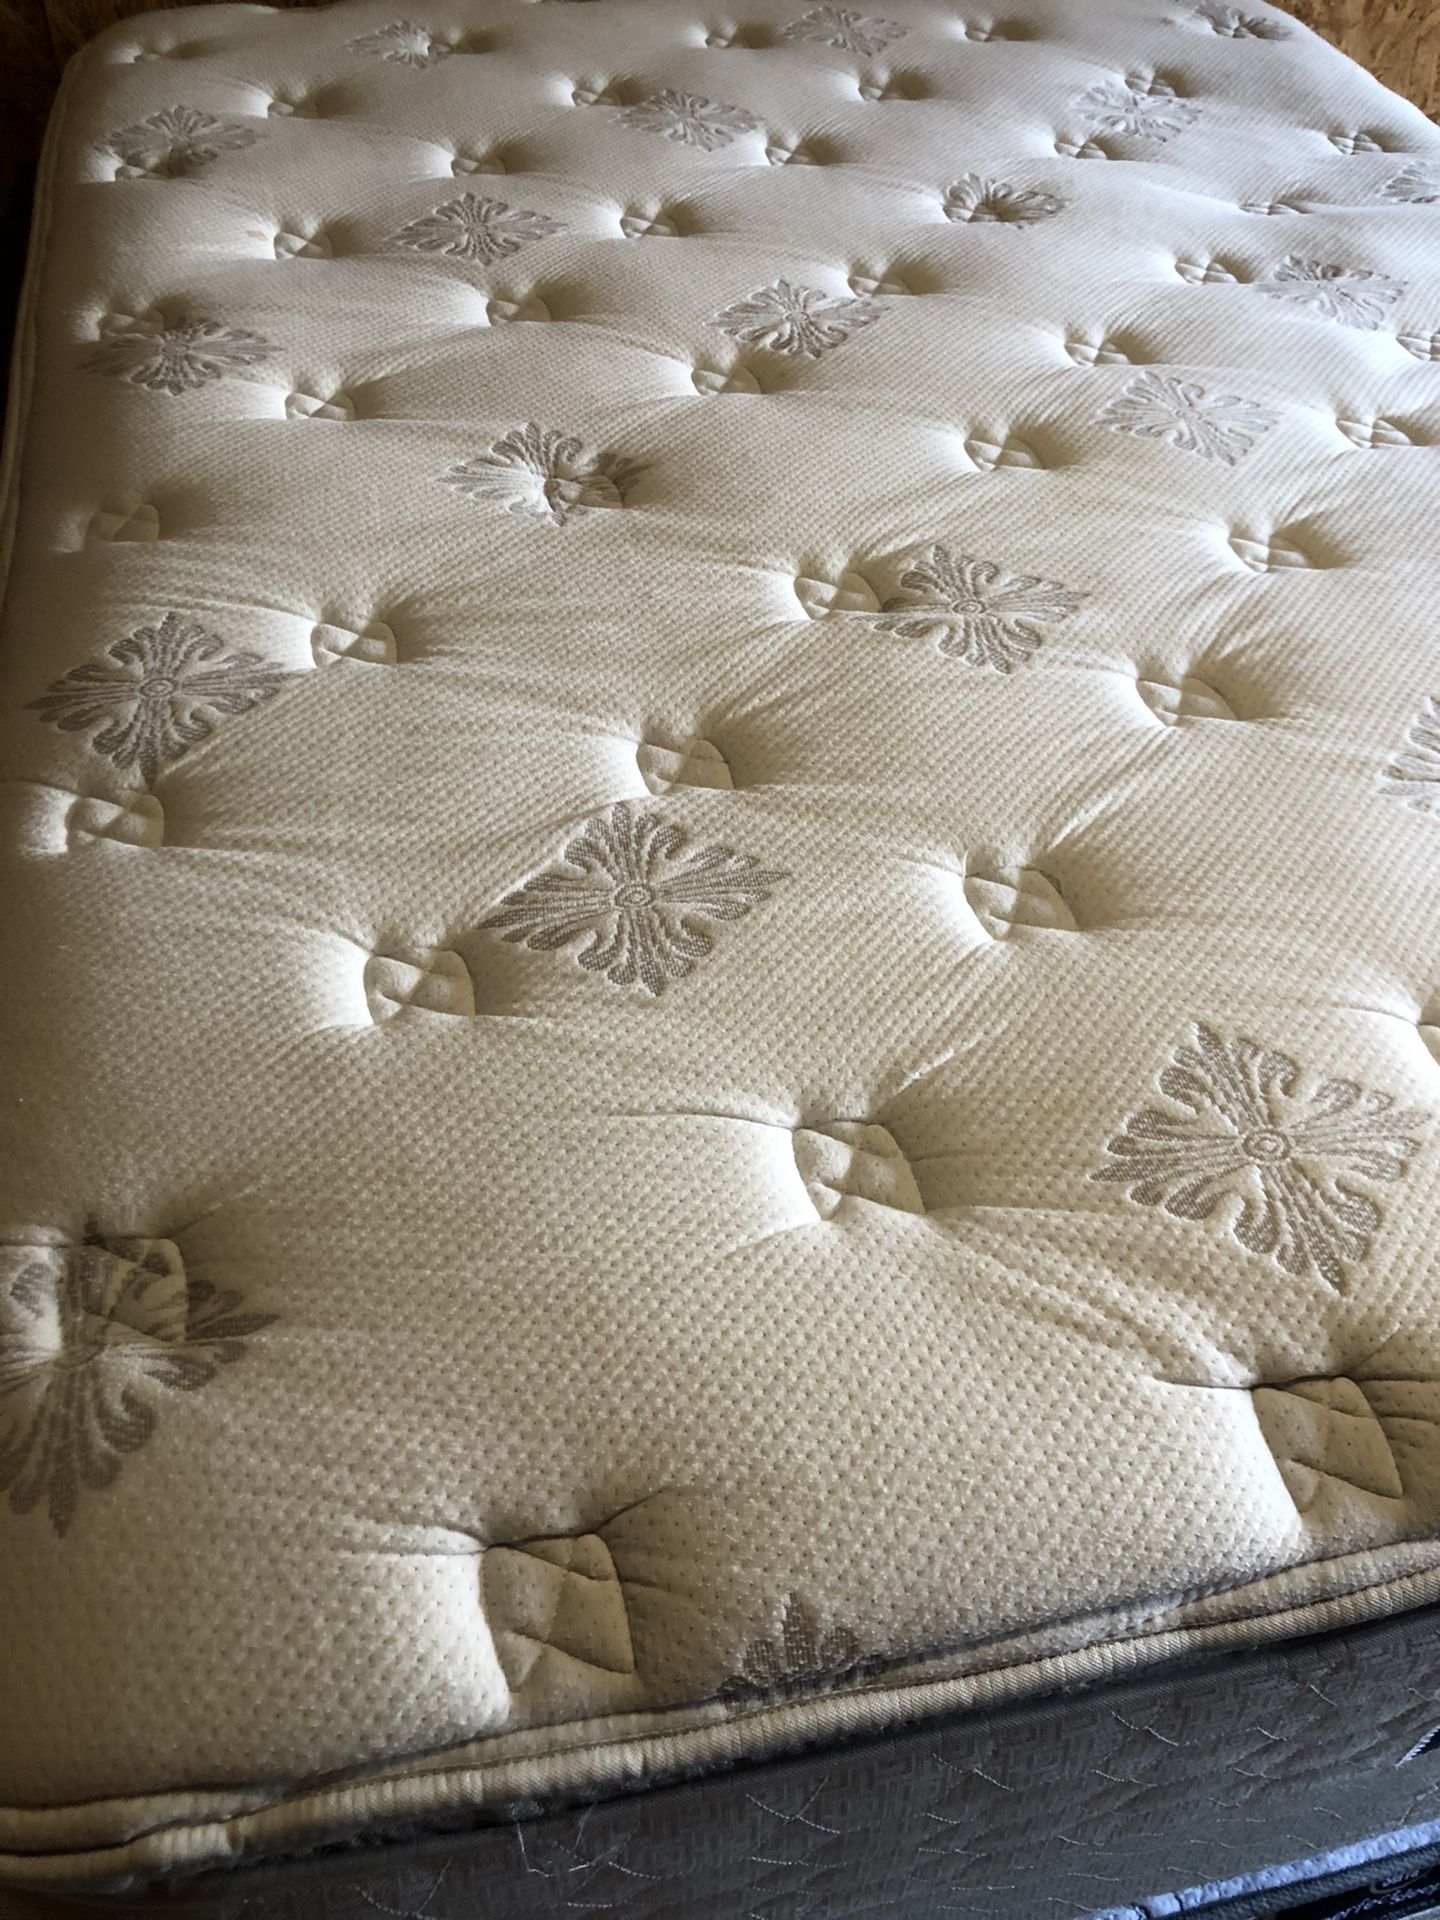 Queen Sealy pillow top bed